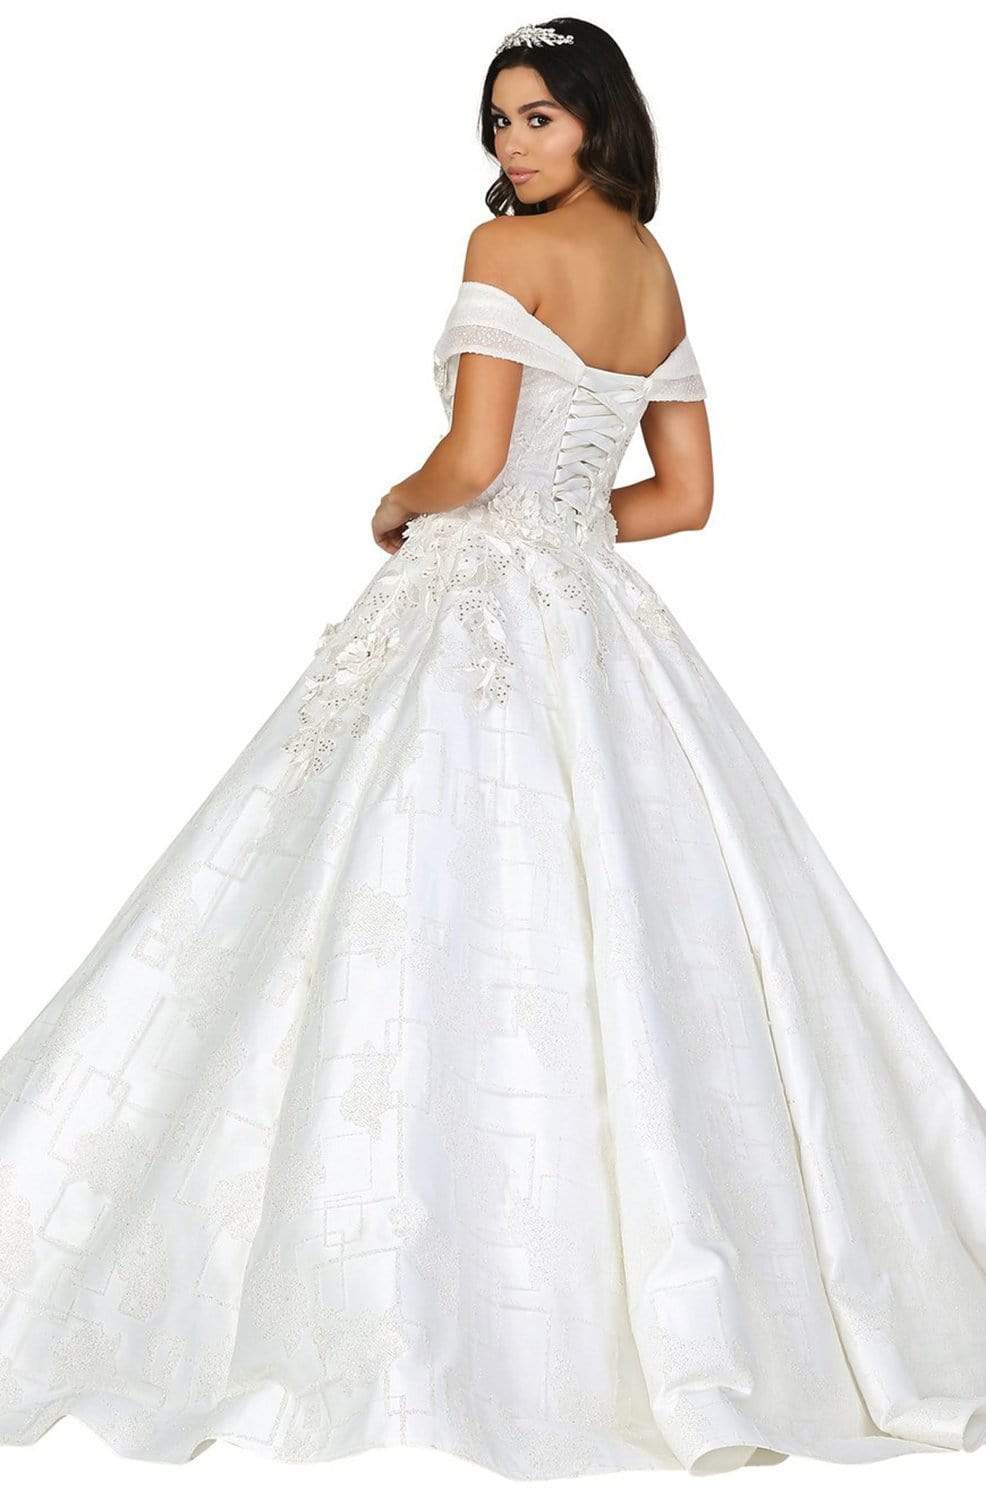 Dancing Queen - 153 Embellished Off-Shoulder Ballgown With Train Wedding Dresses